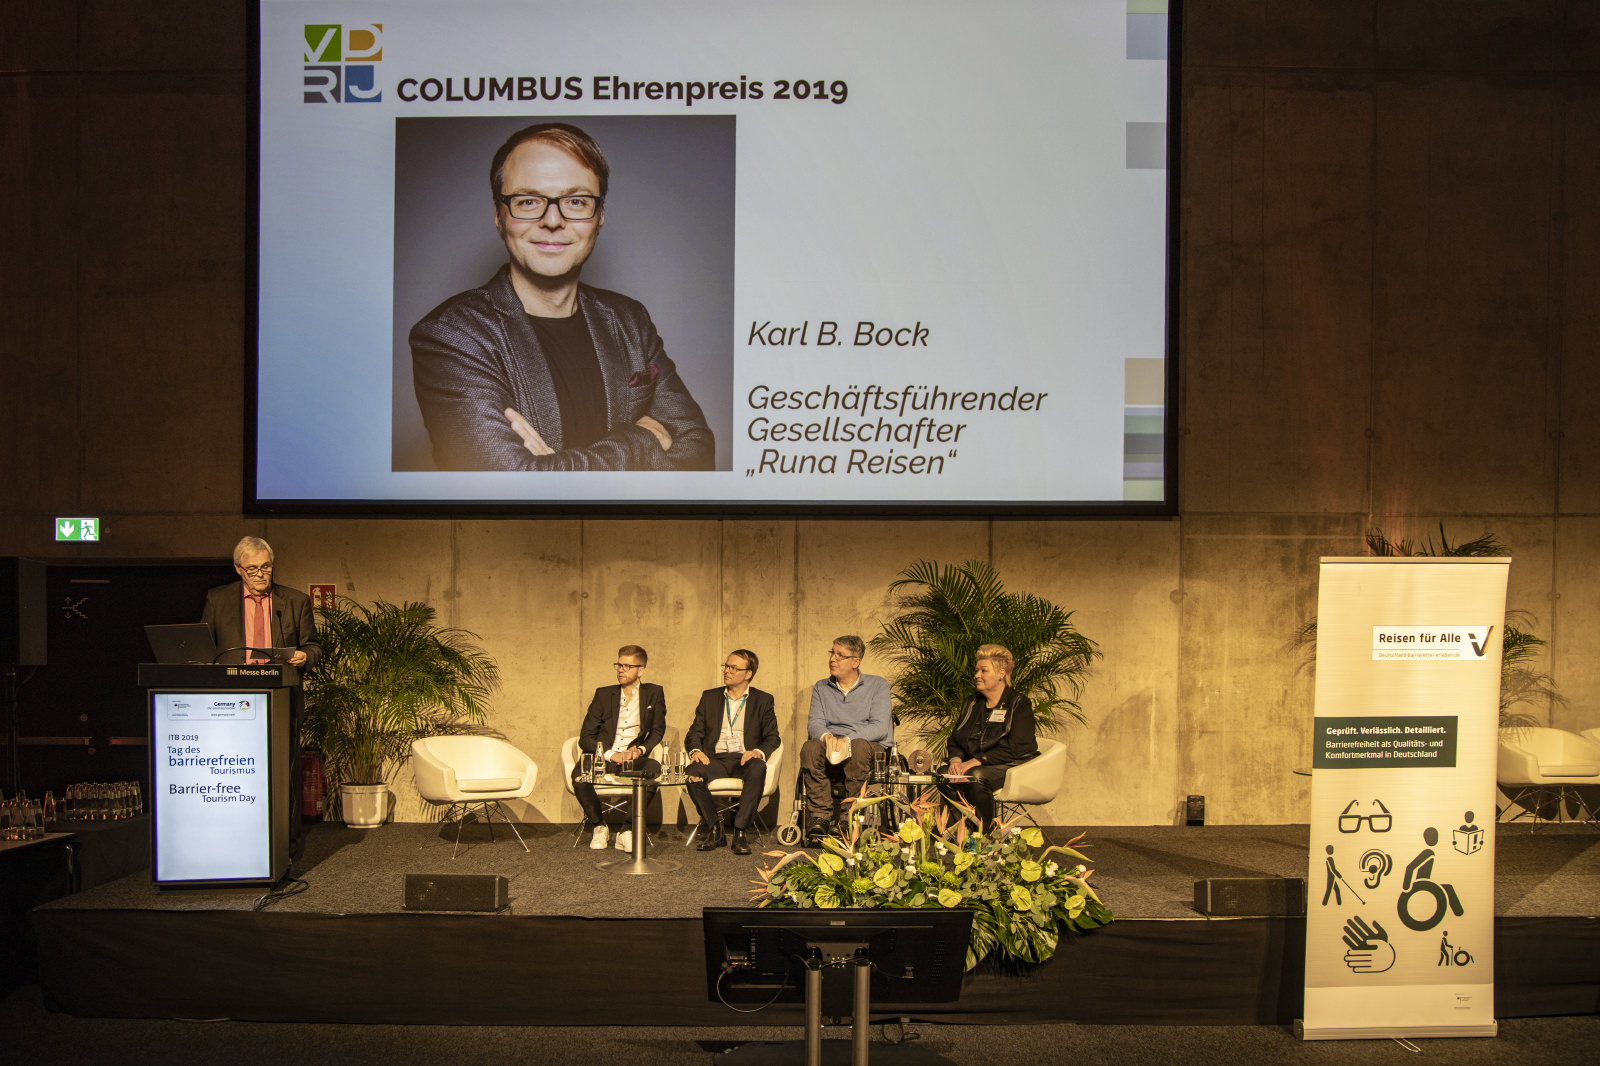 Verleihung VDRJ Columbus Ehrenpreis 2019; Foto: Holger Leue